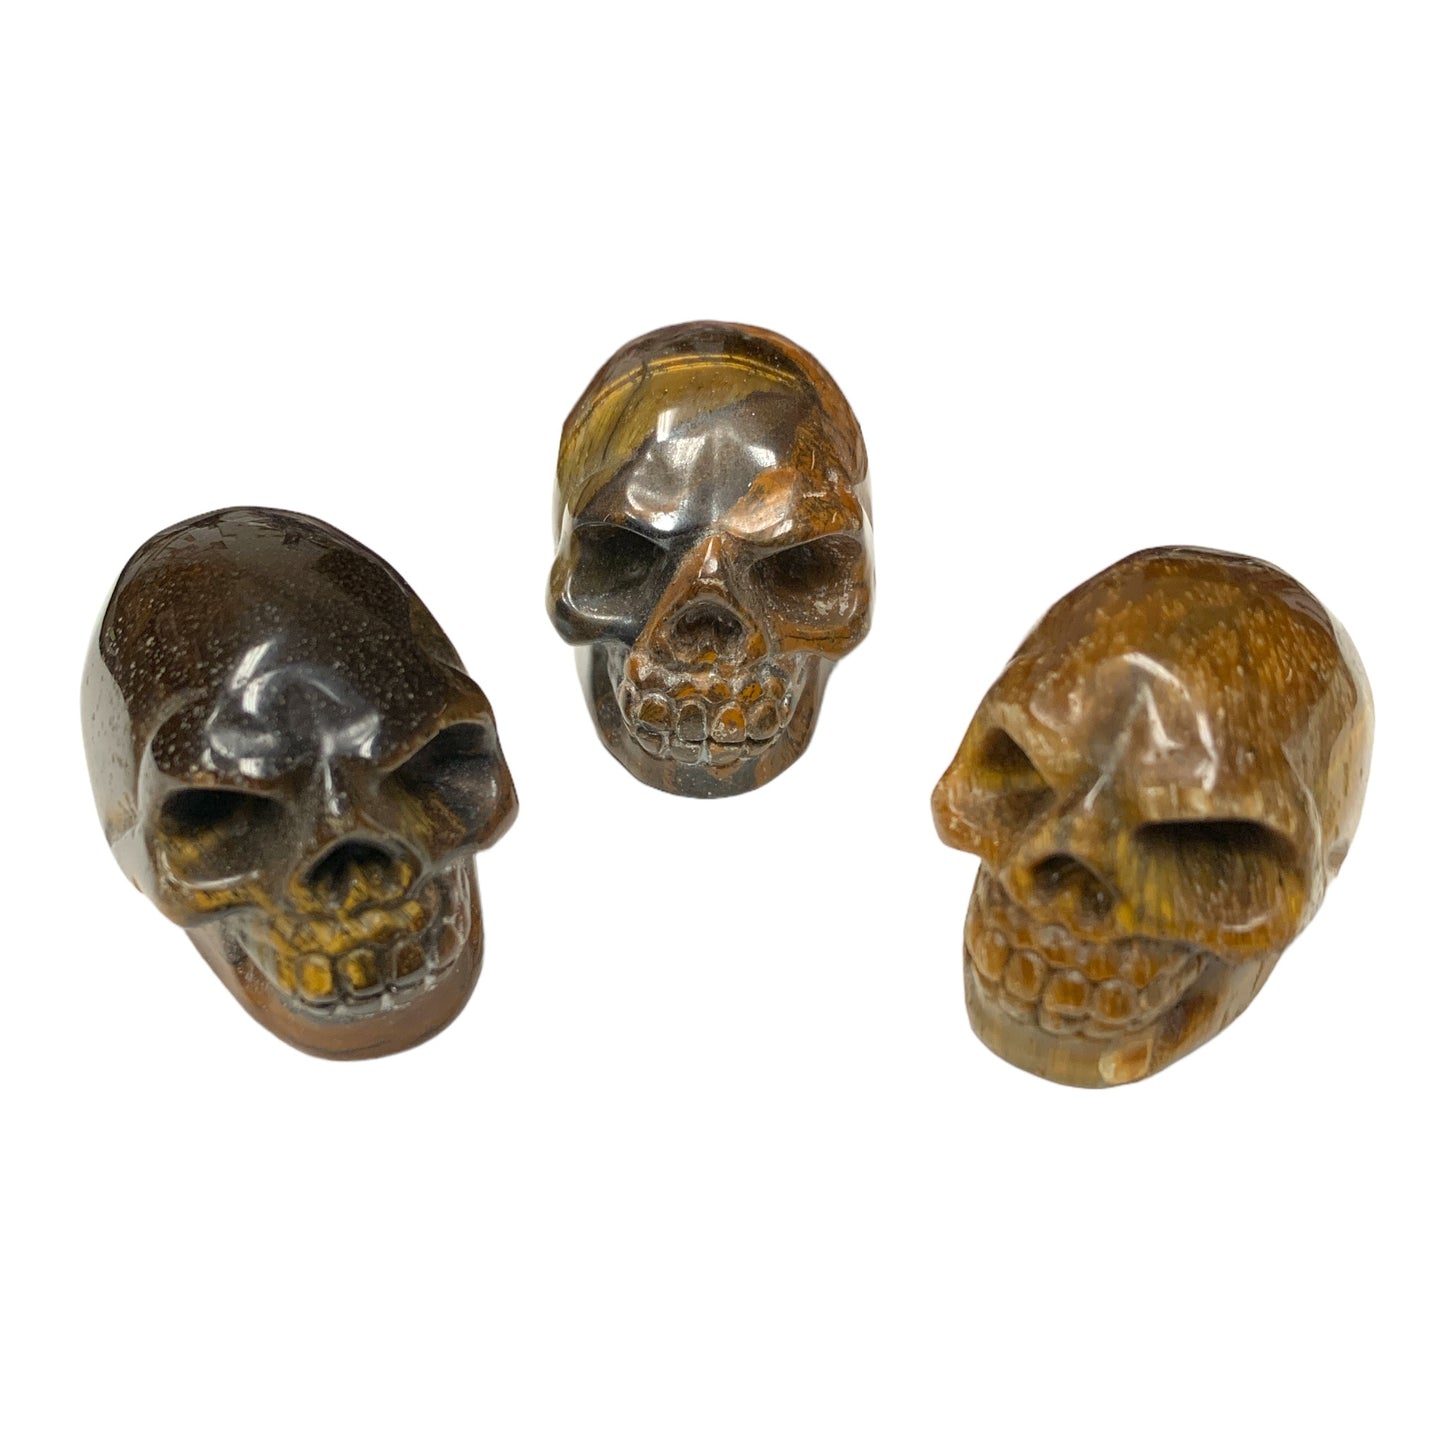 Skull - TIGERS EYE - Extra Small 30Hx40Lx28mm wide - China - NEW722